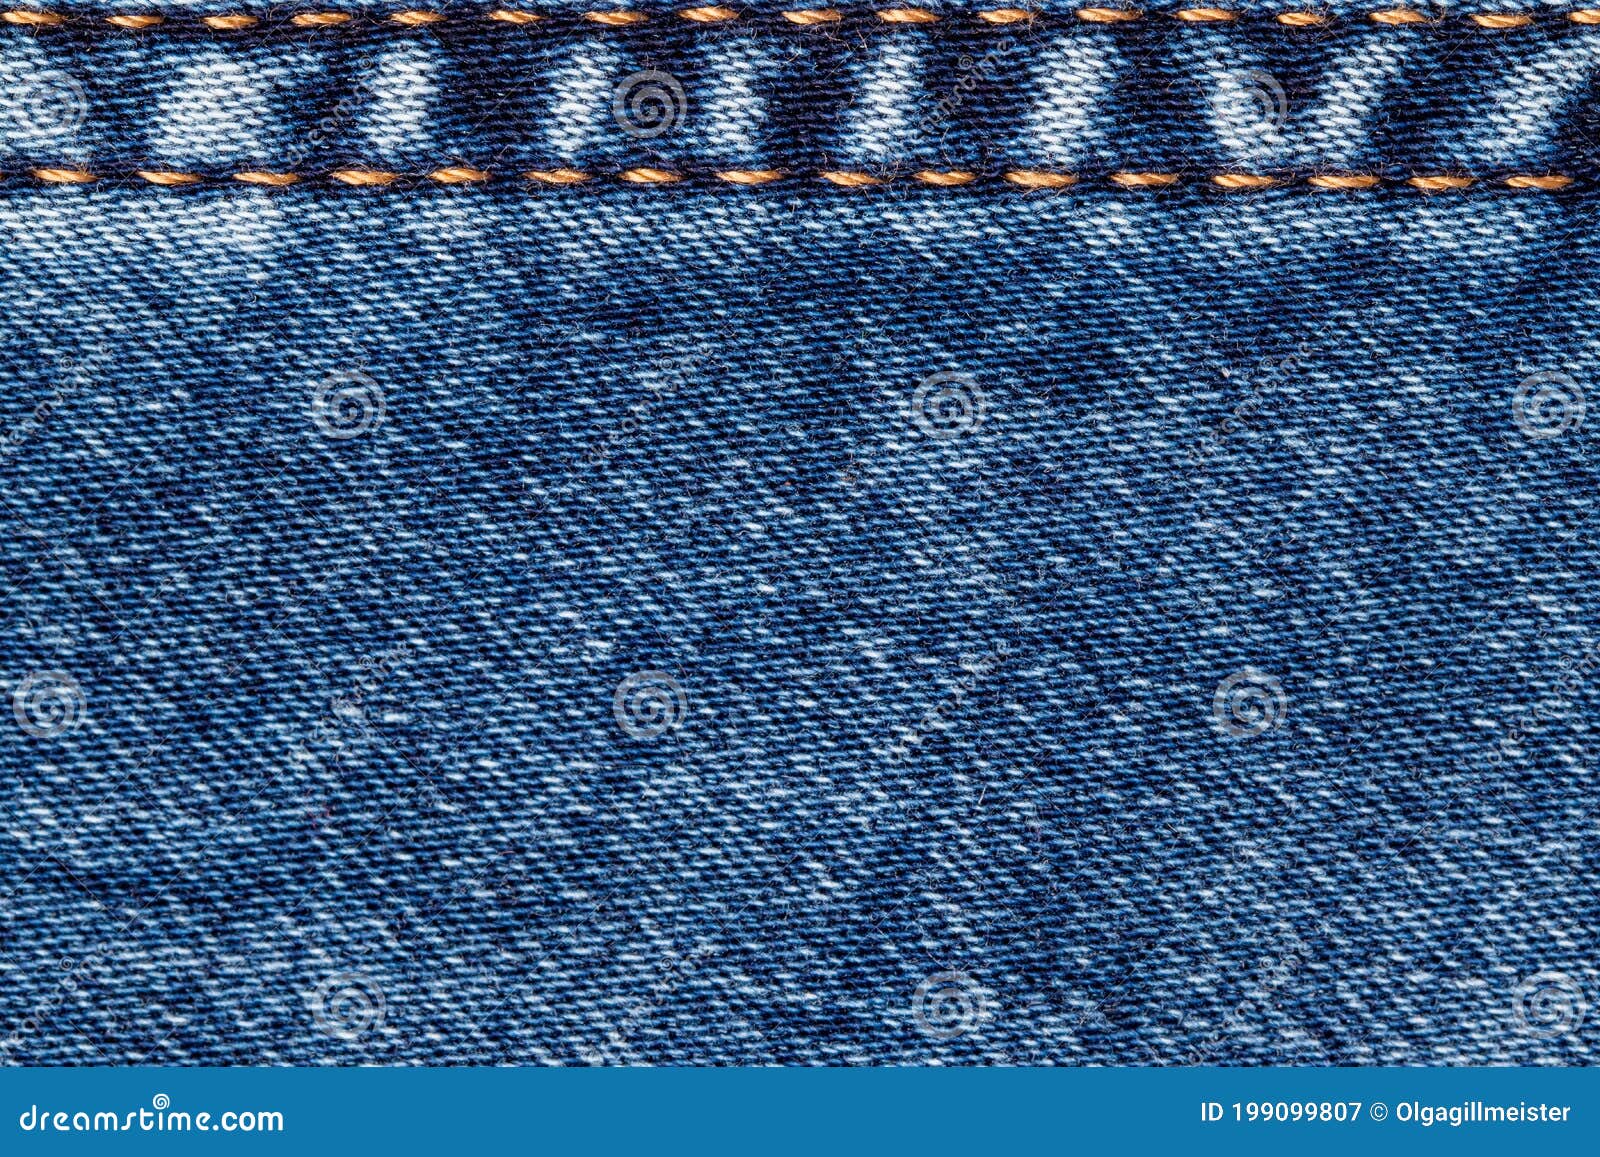 Denim Background Texture. Close-up of Details of Empty Light Blue Jeans ...